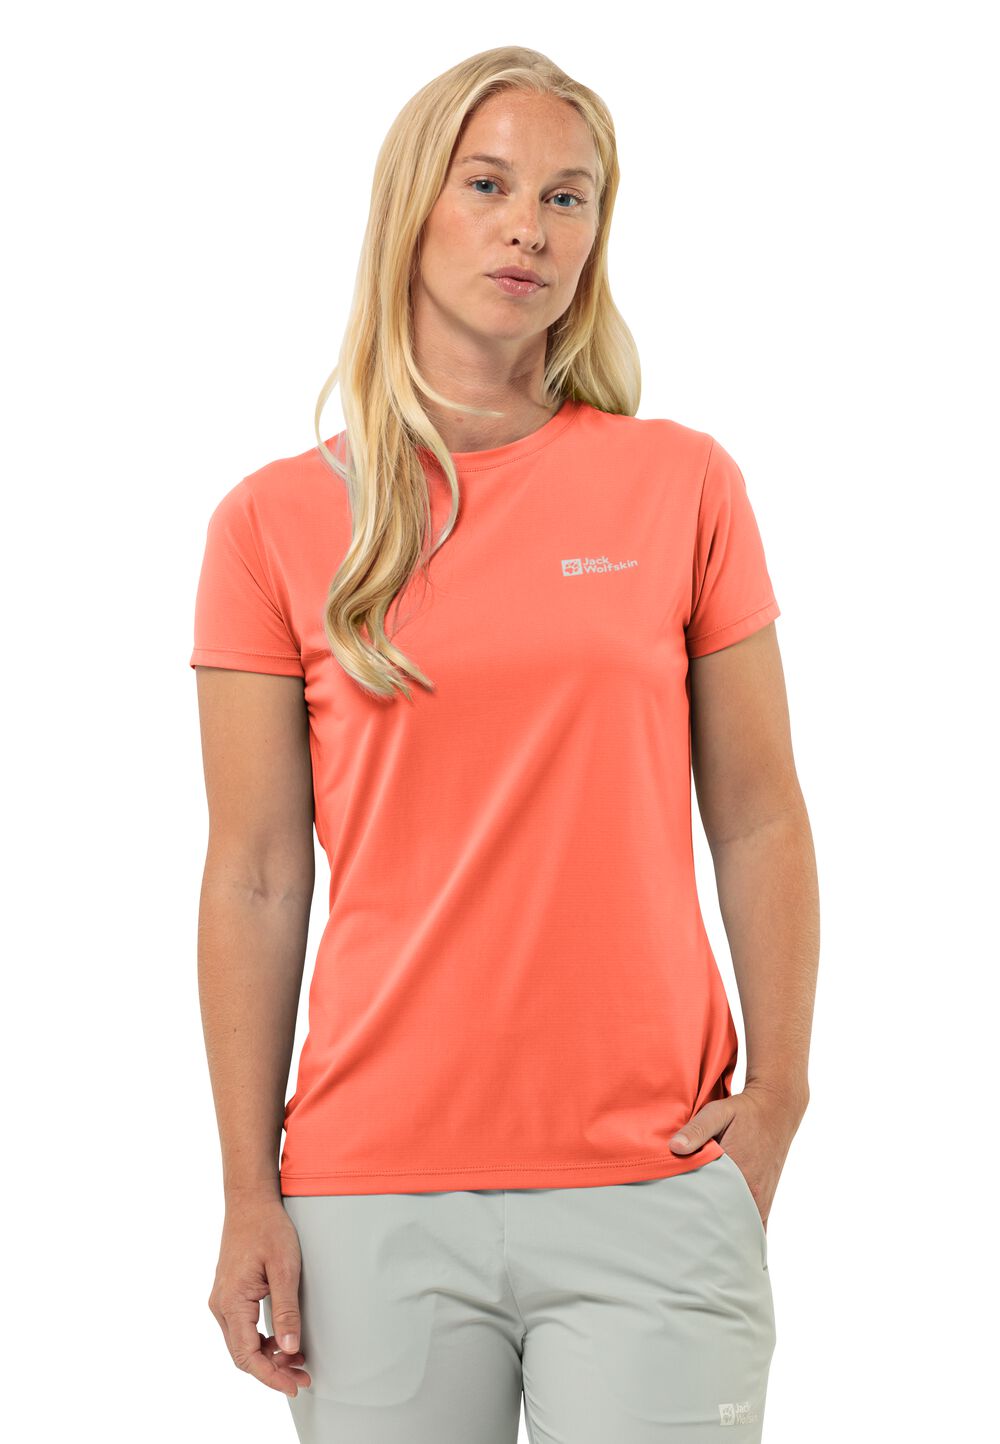 Jack Wolfskin Prelight Trail T-Shirt Women Functioneel shirt Dames XL rood digital orange